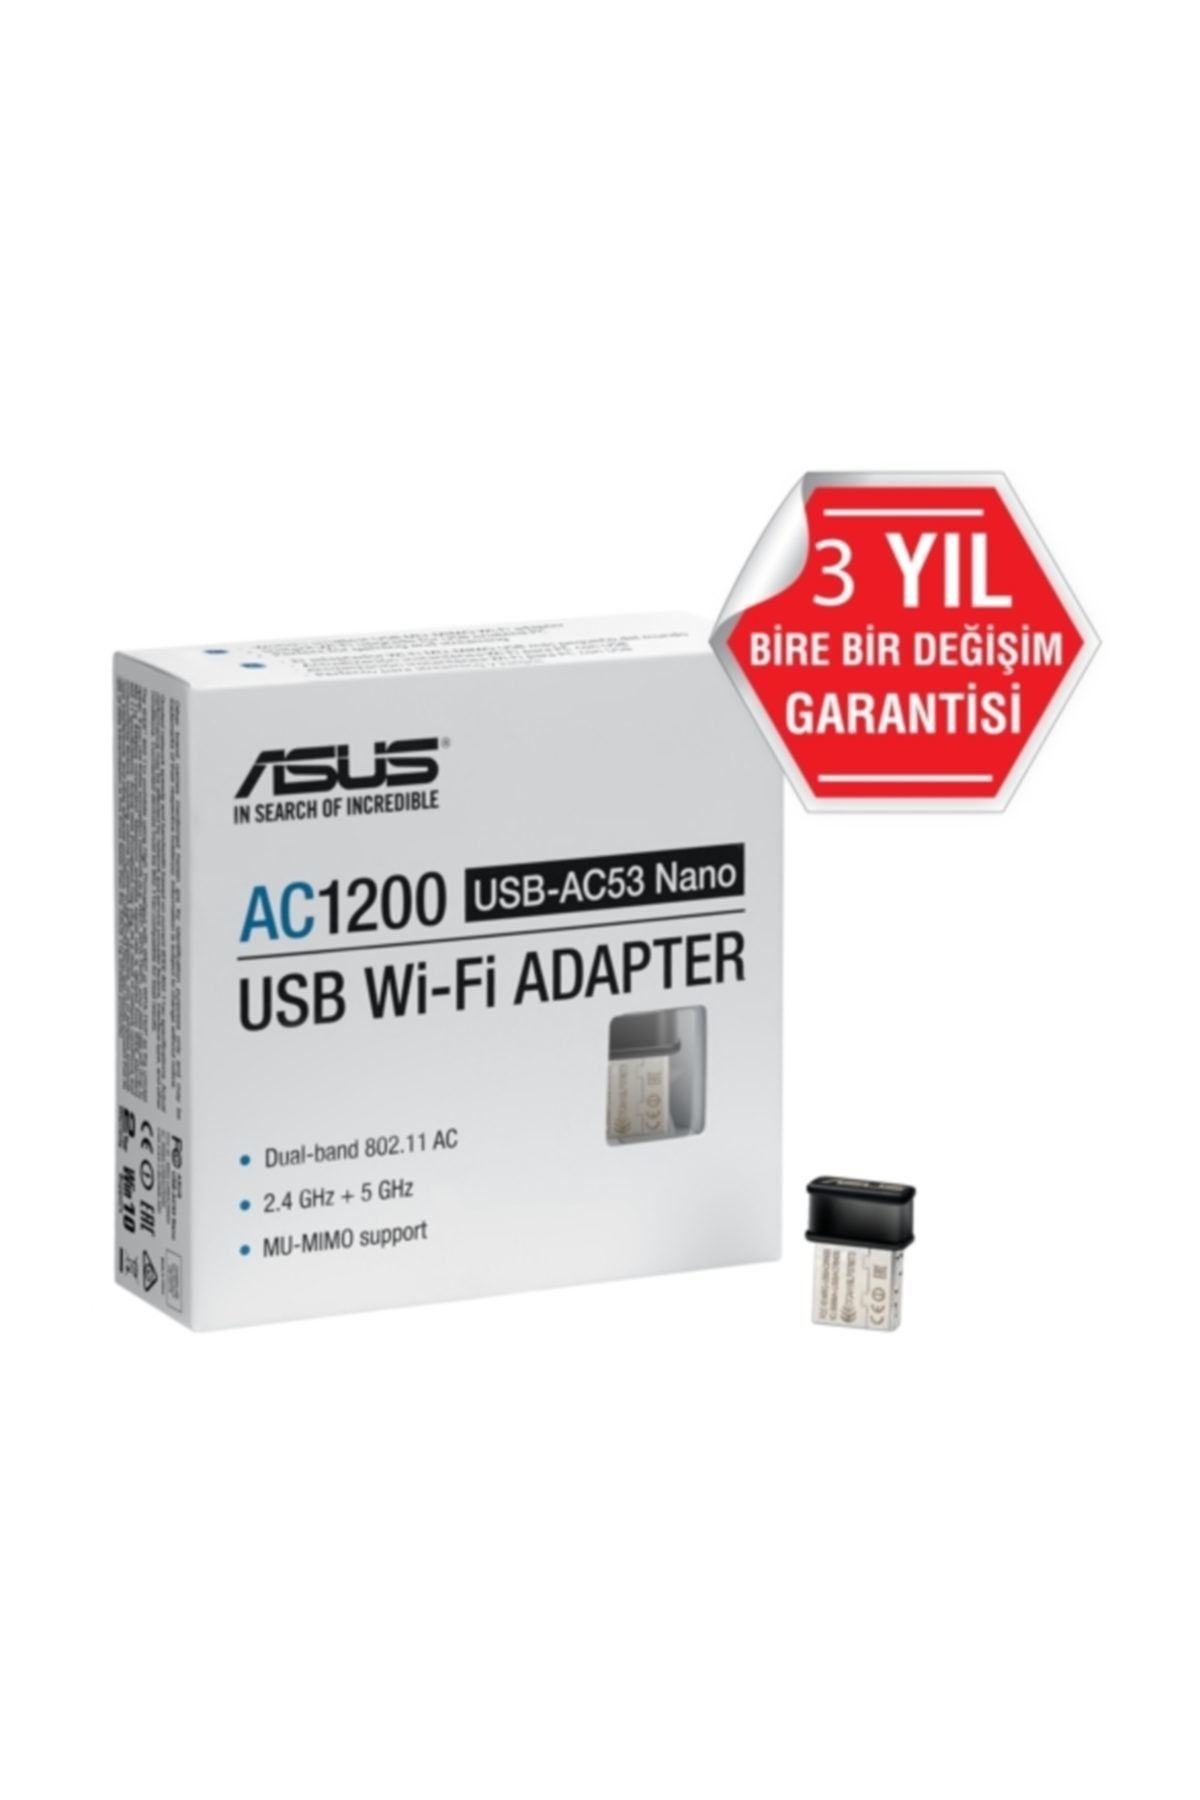 ASUS USB-AC53 Nano AC1200 Kablosuz USB Adaptör